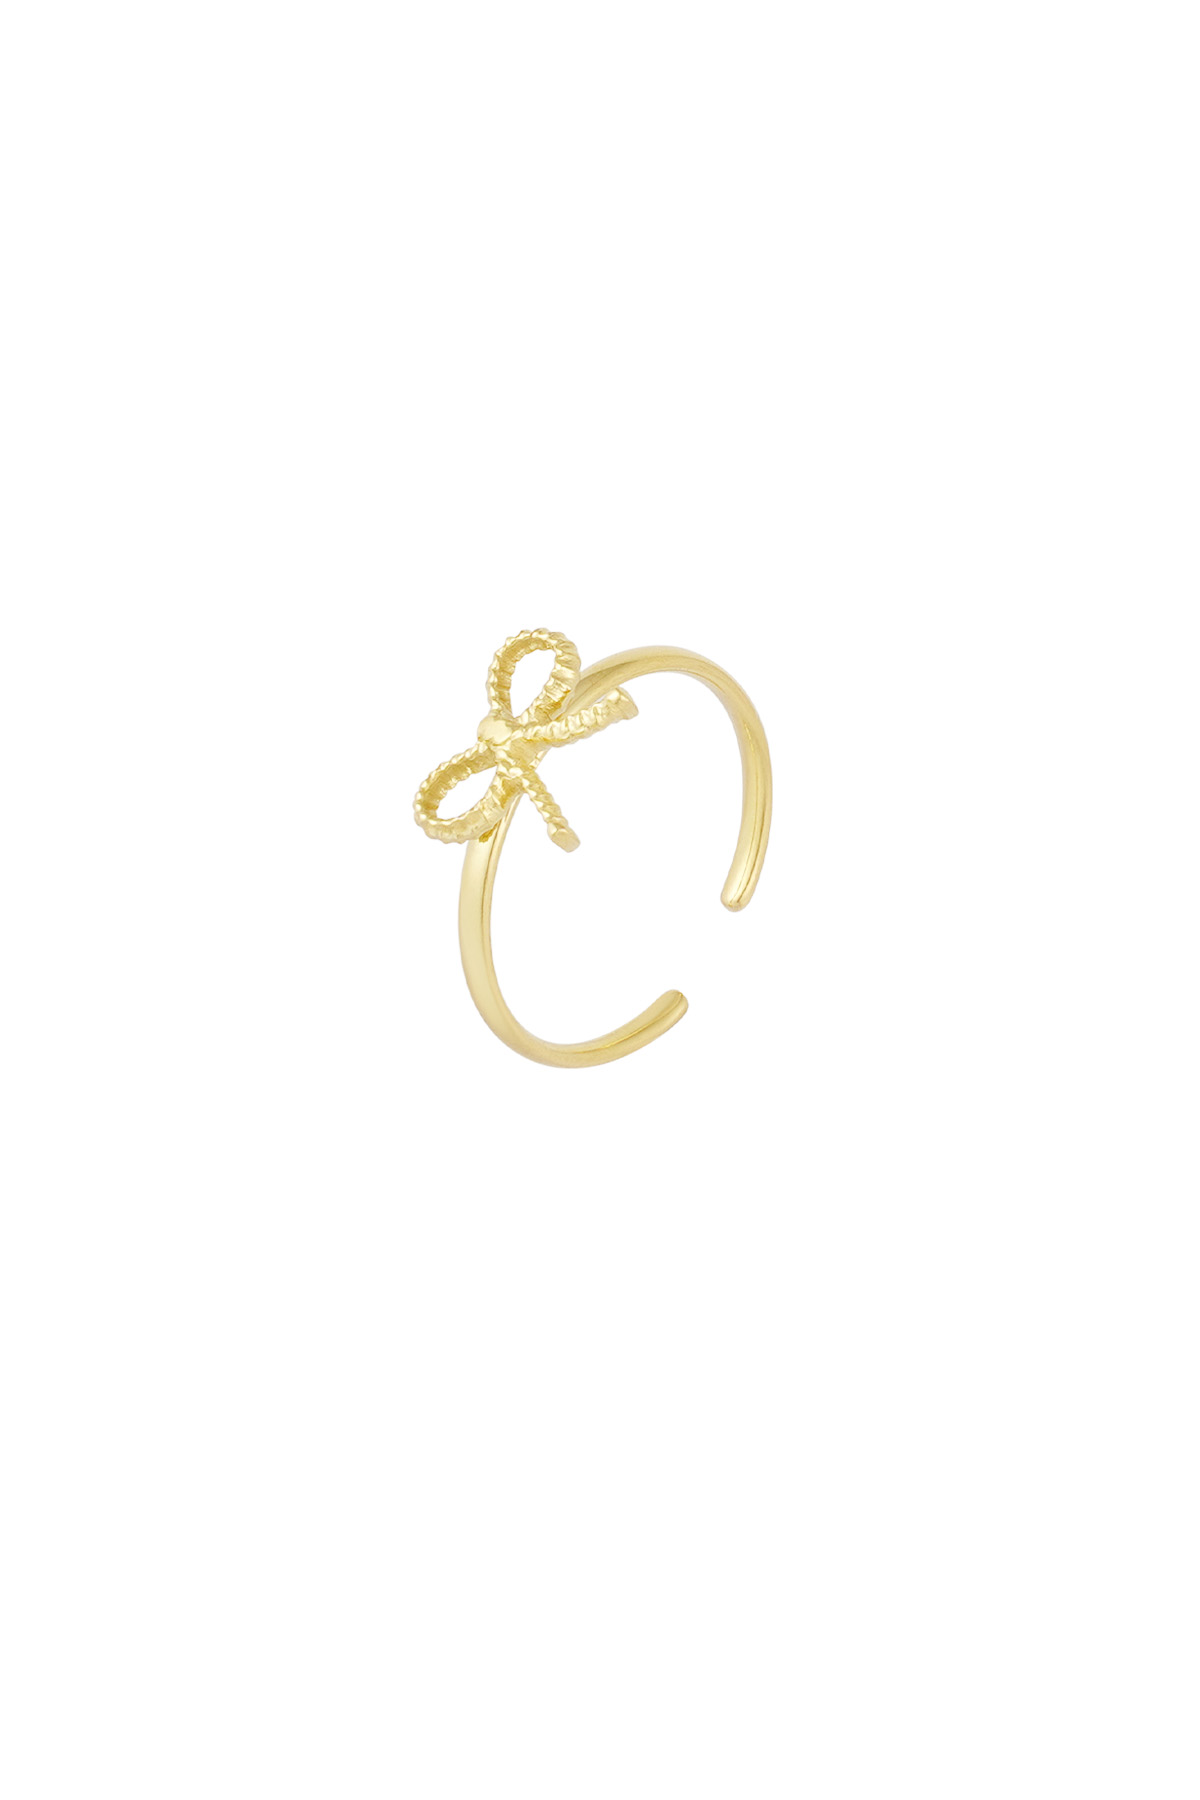 Ring bow basic - gold h5 